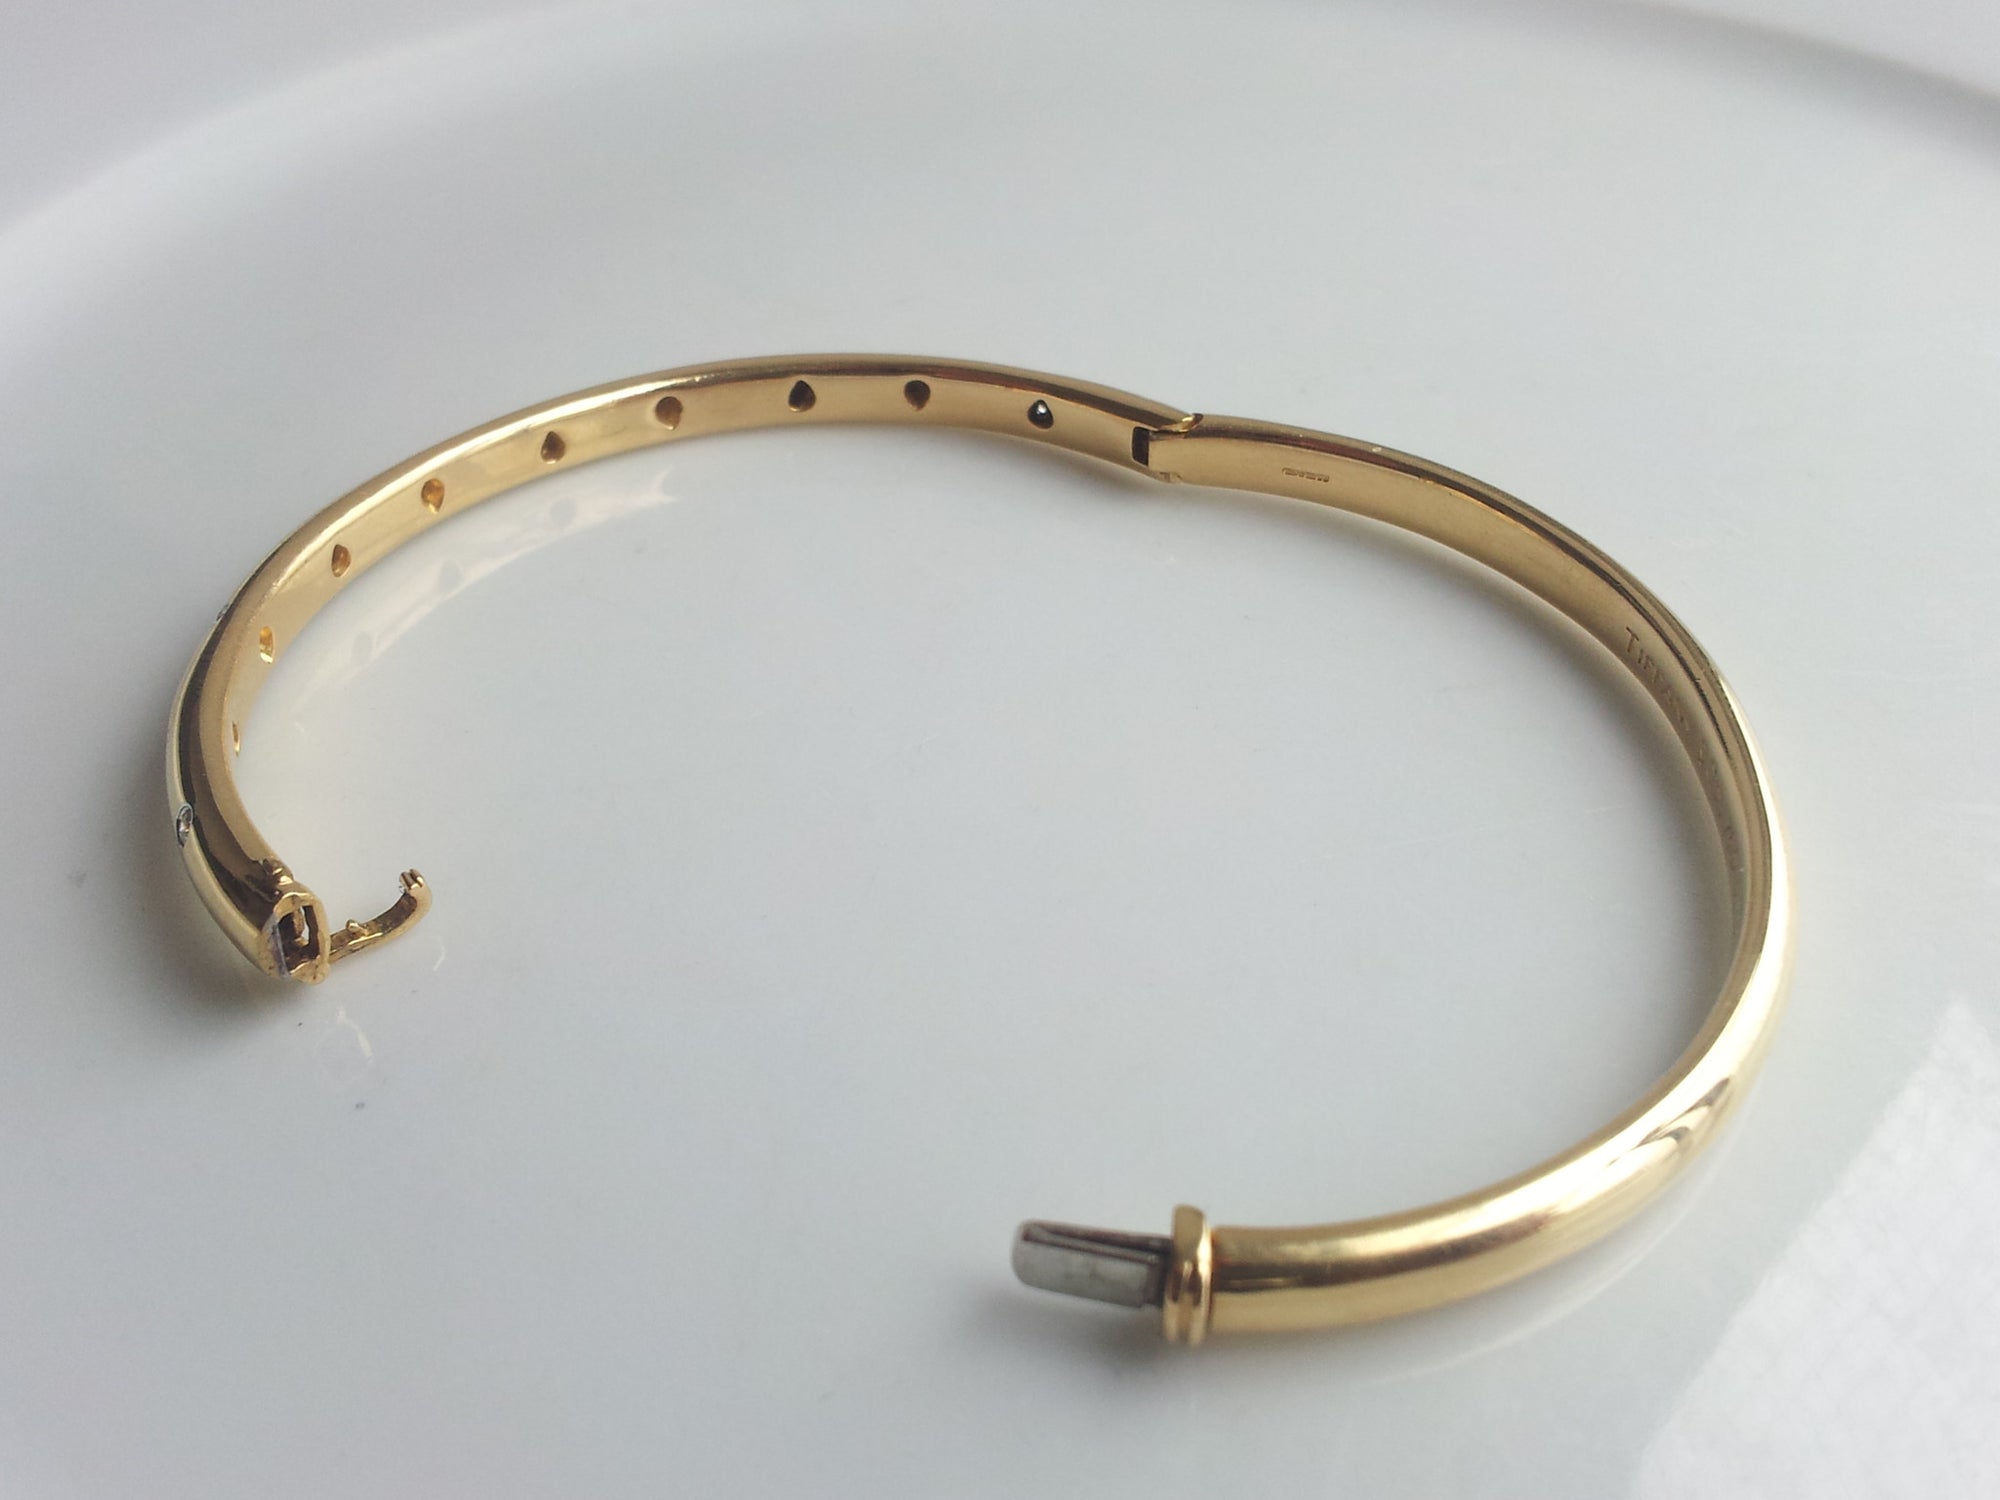 Tiffany & Co. 'Etoile' Diamond Bangle / Bracelet, in 18K Gold & Platinum